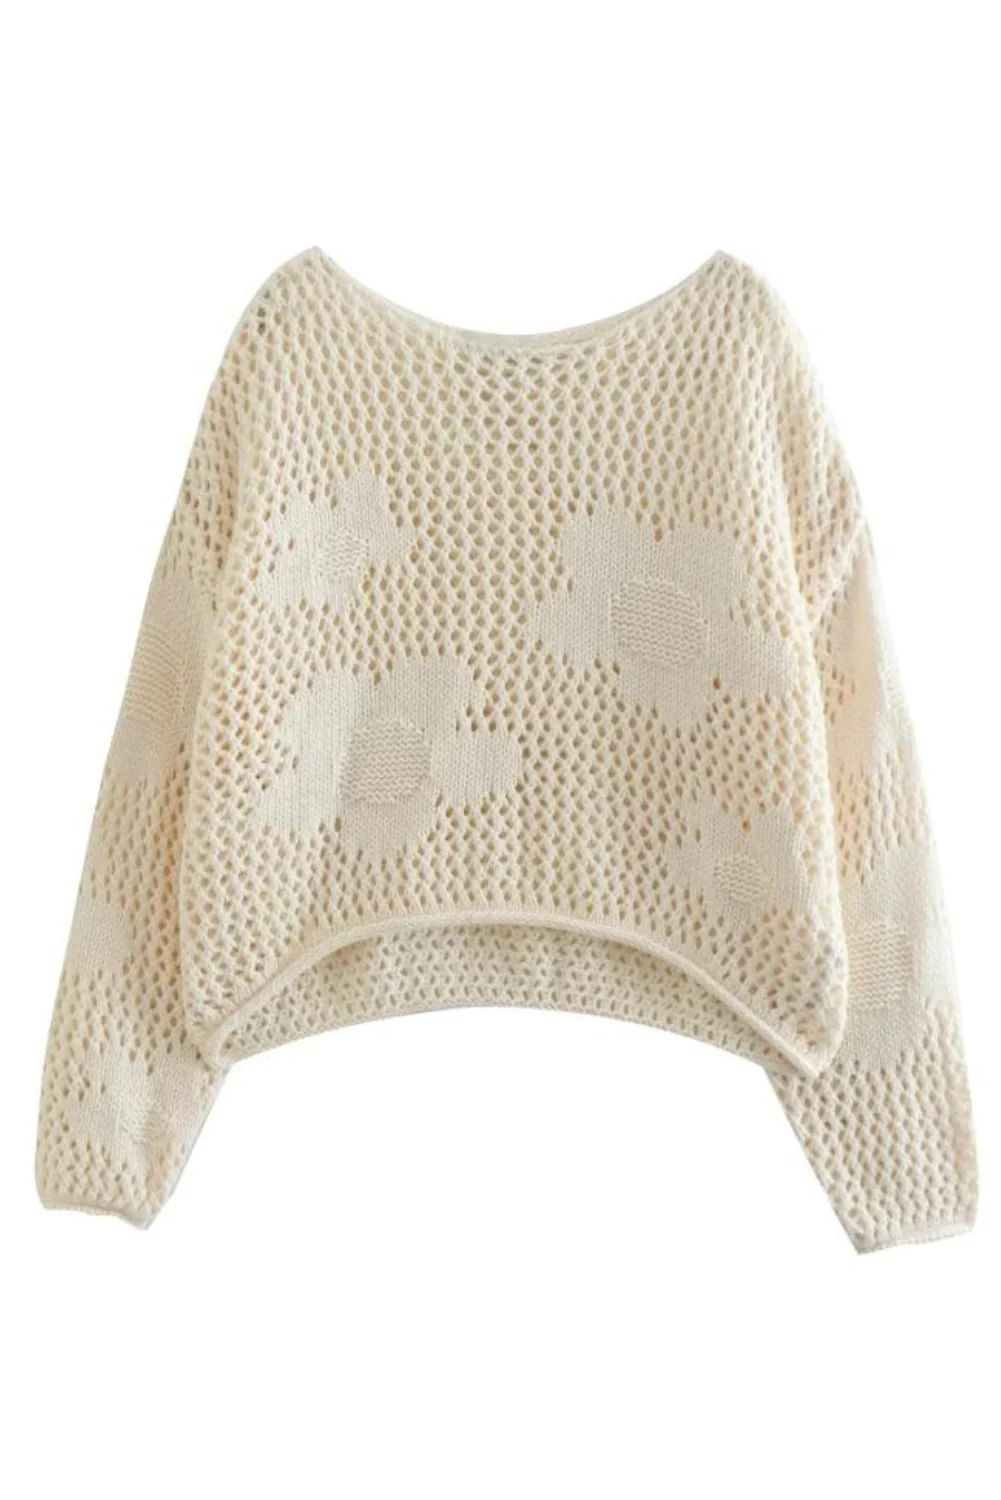 'Doris' Loose Knit Flower Sweater | Goodnight Macaroon